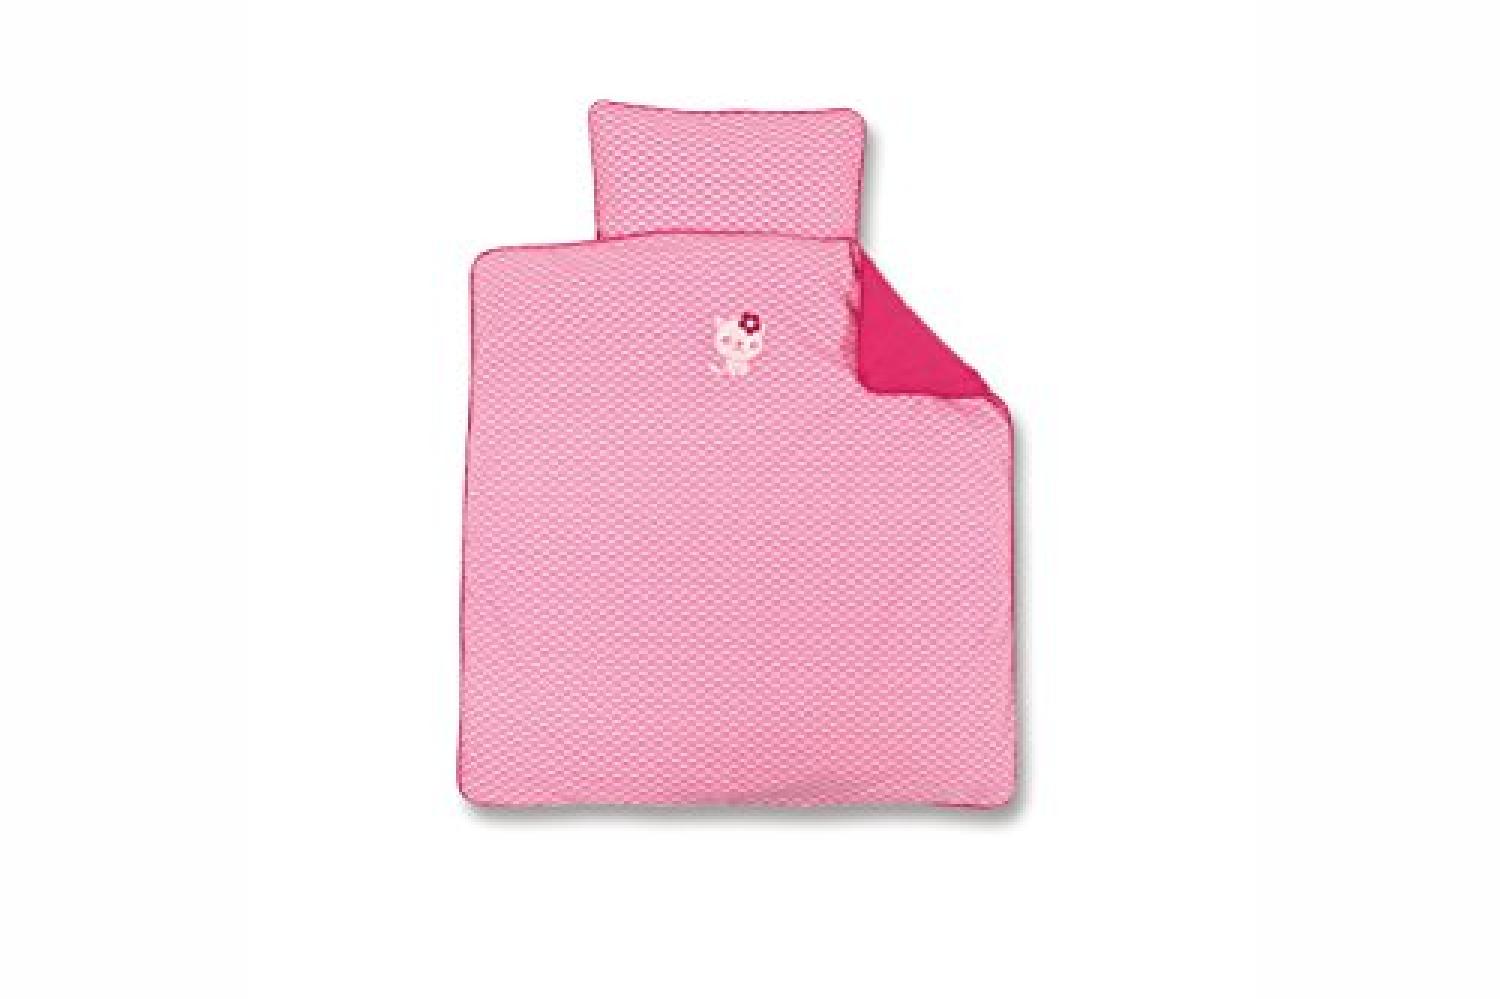 Baby Boum 'Kitty' Bettbezug-Set 80 x 80 cm, fuchsia pink Bild 1